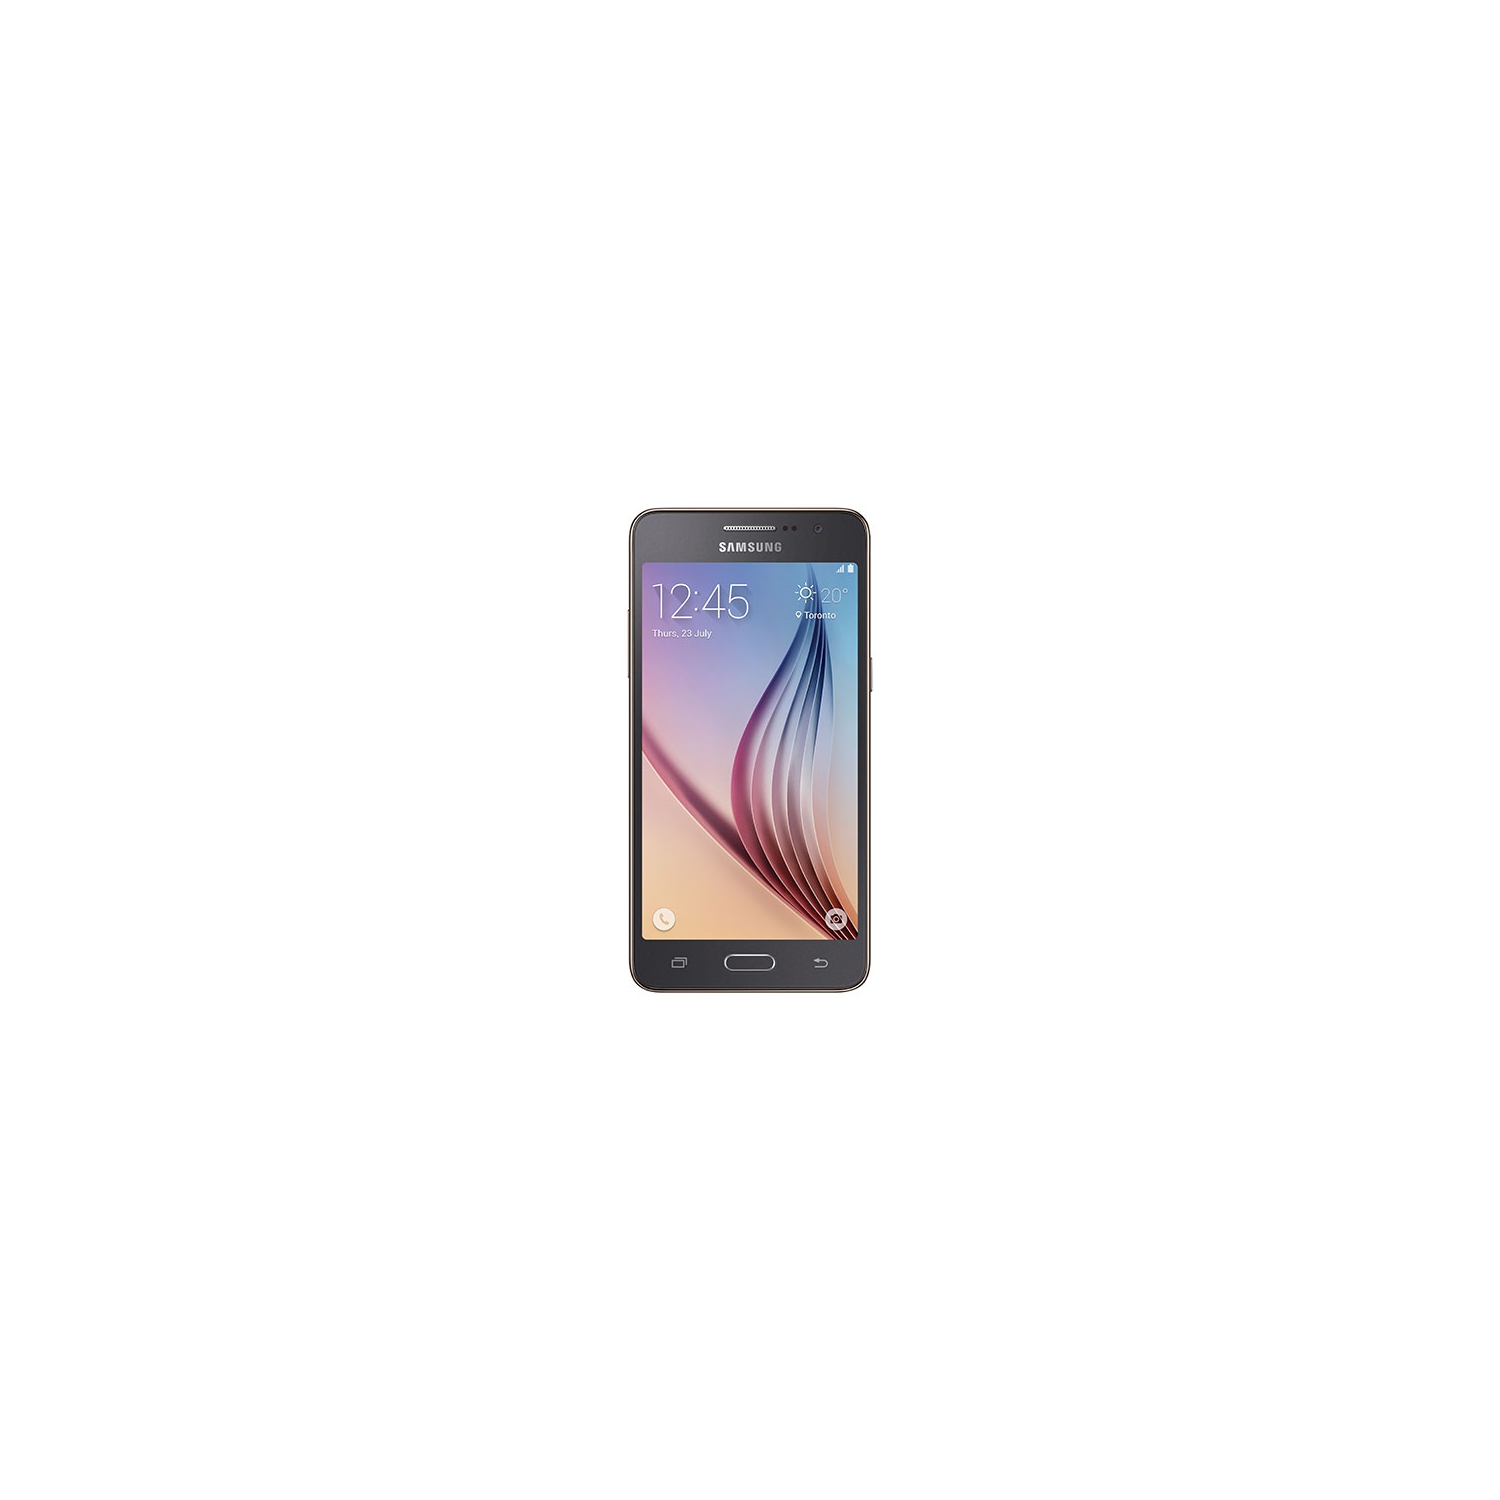 Samsung Galaxy Grand Prime 8GB Smartphone - Black - Unlocked - Open Box